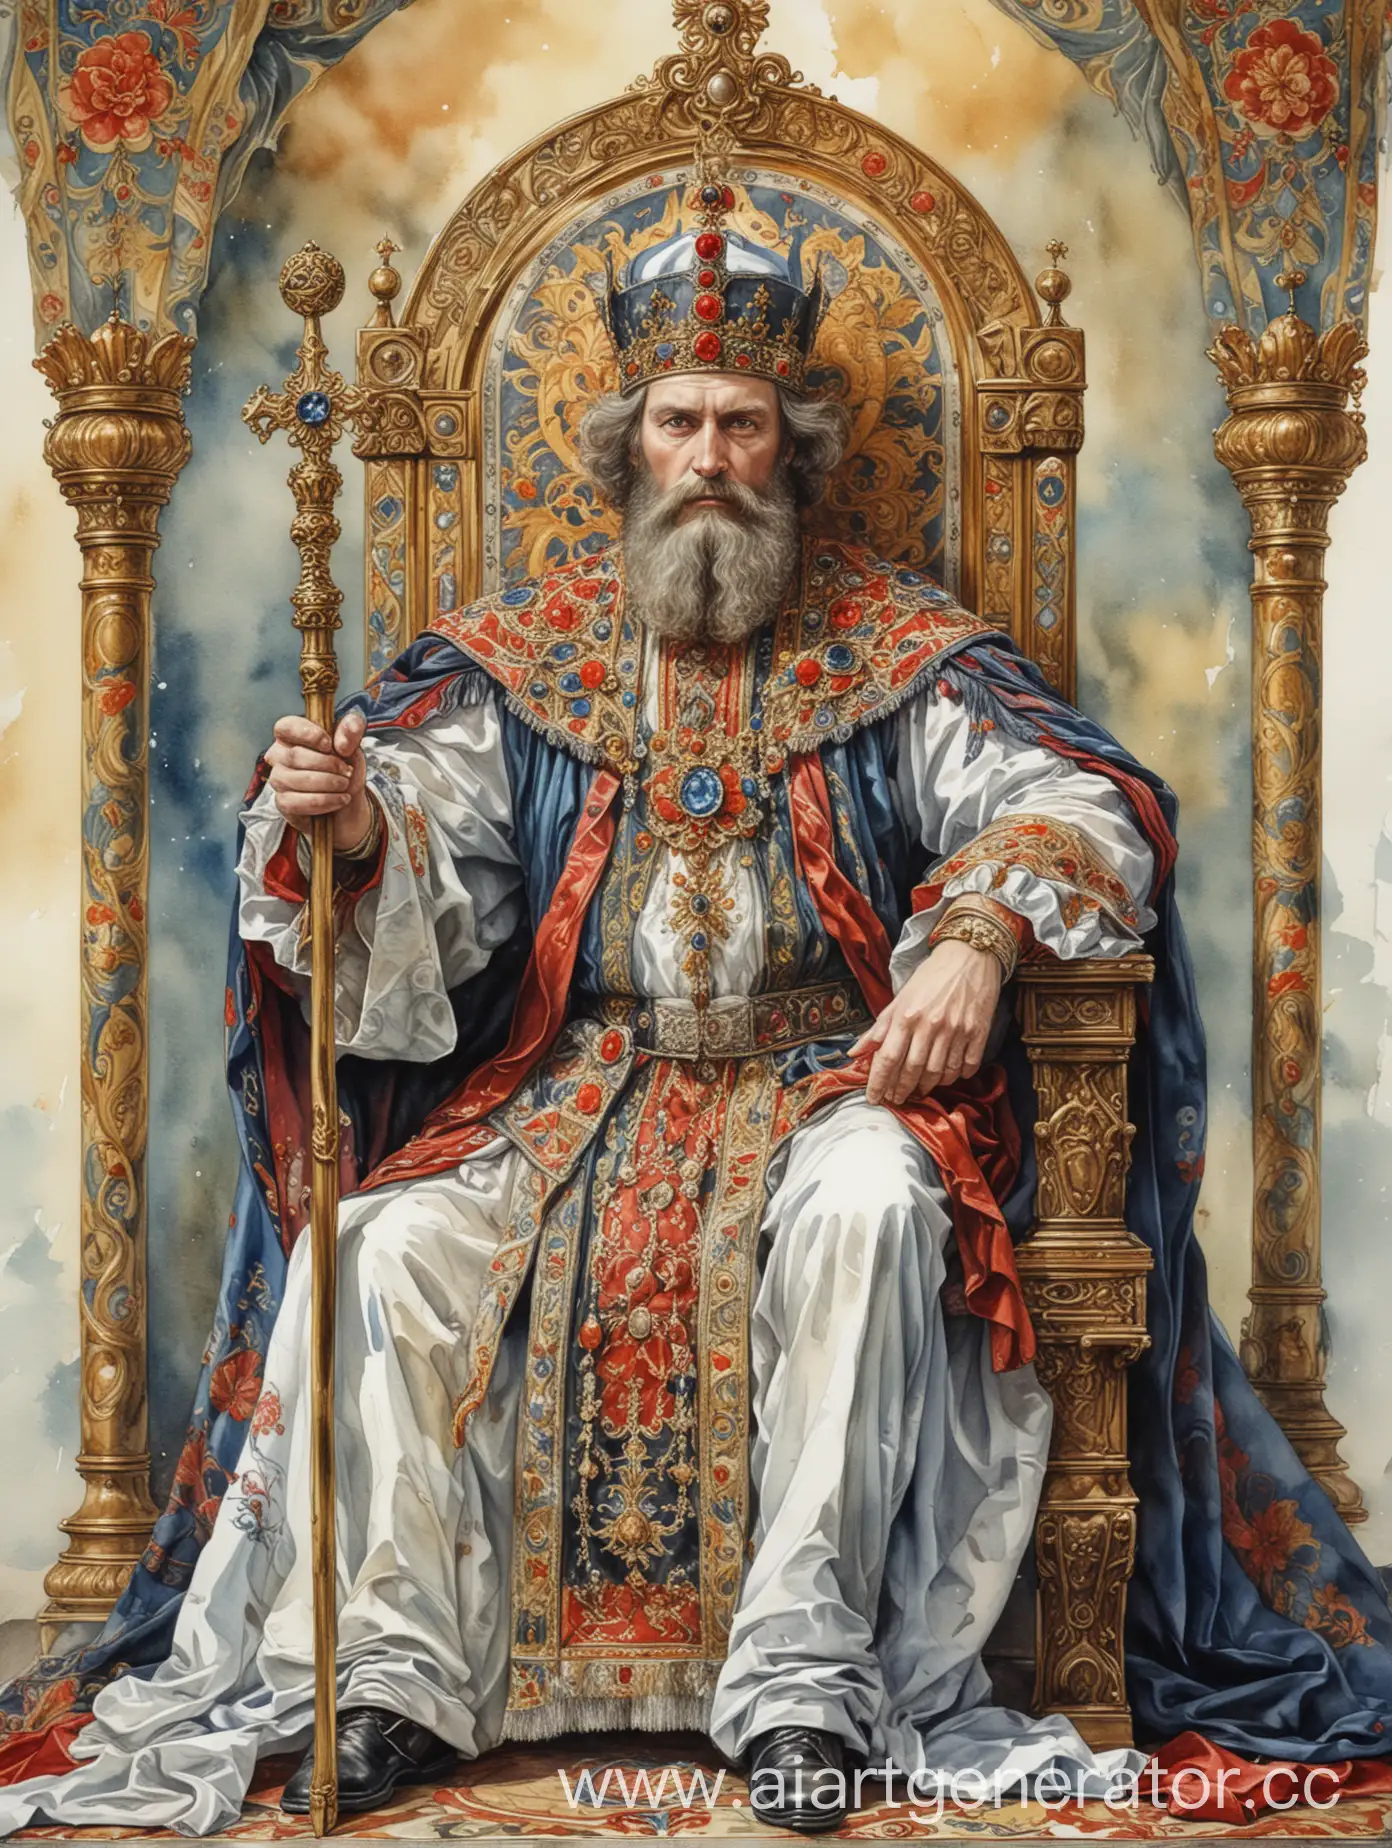 Russian-Emperor-Tarot-Card-Majestic-Portrait-of-a-Bearded-Authority-in-Ornate-Attire